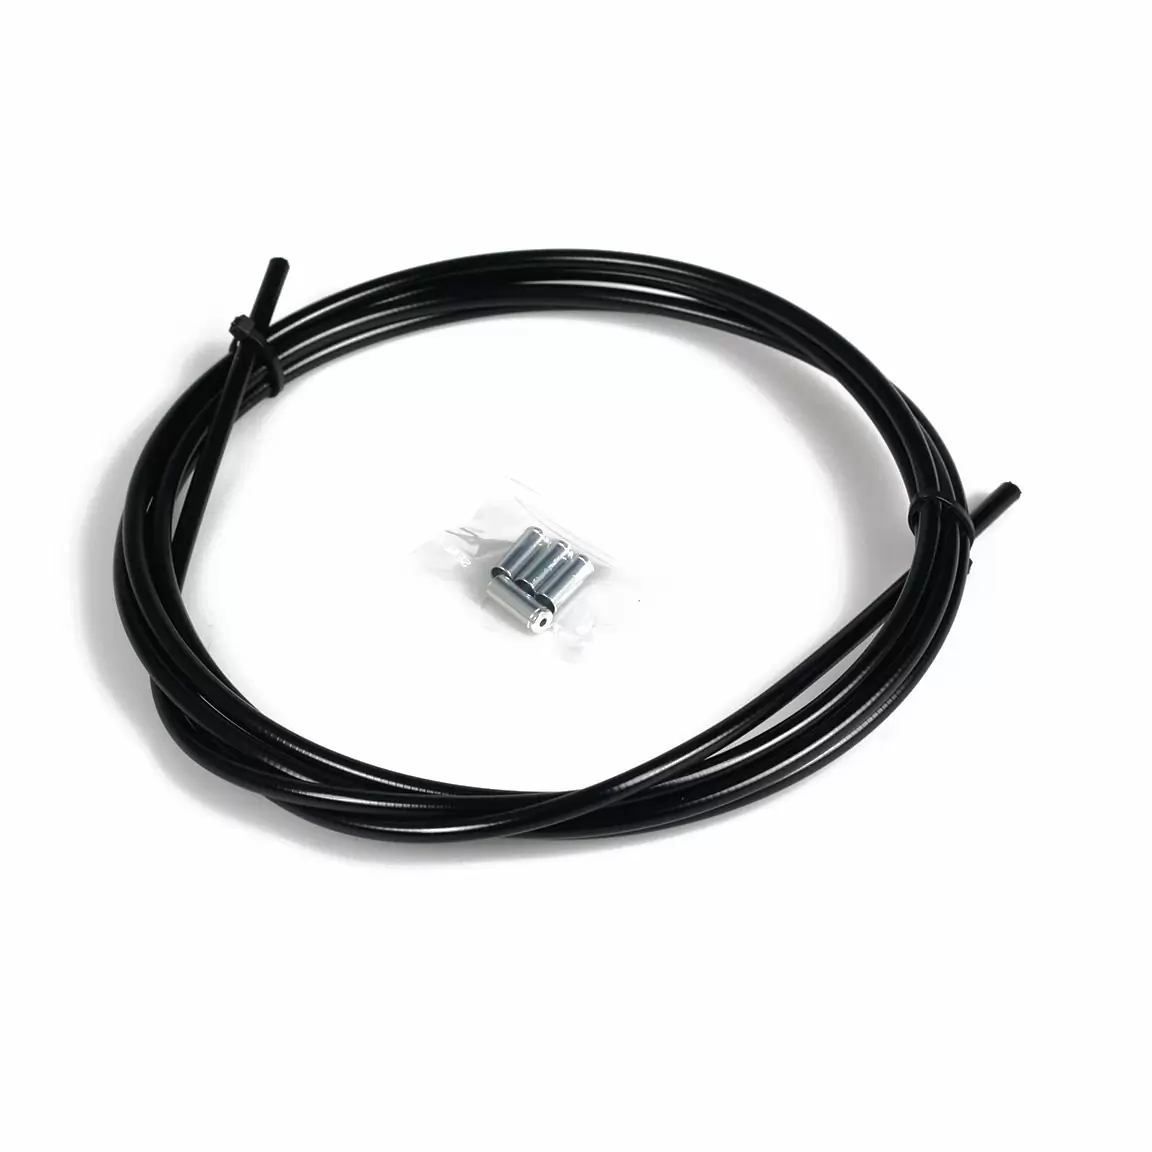 carcasa exterior cable freno blb - negro - image